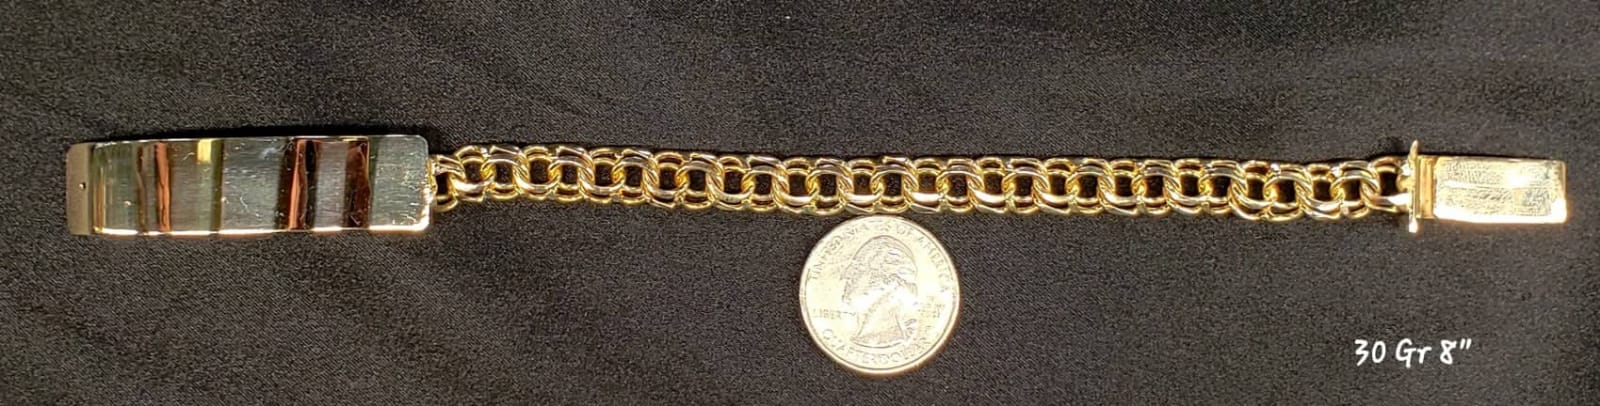 0.65 CT oval Tanzanite Light Weight Bracelet in 14kt White Gold -  DavidSternDiamonds